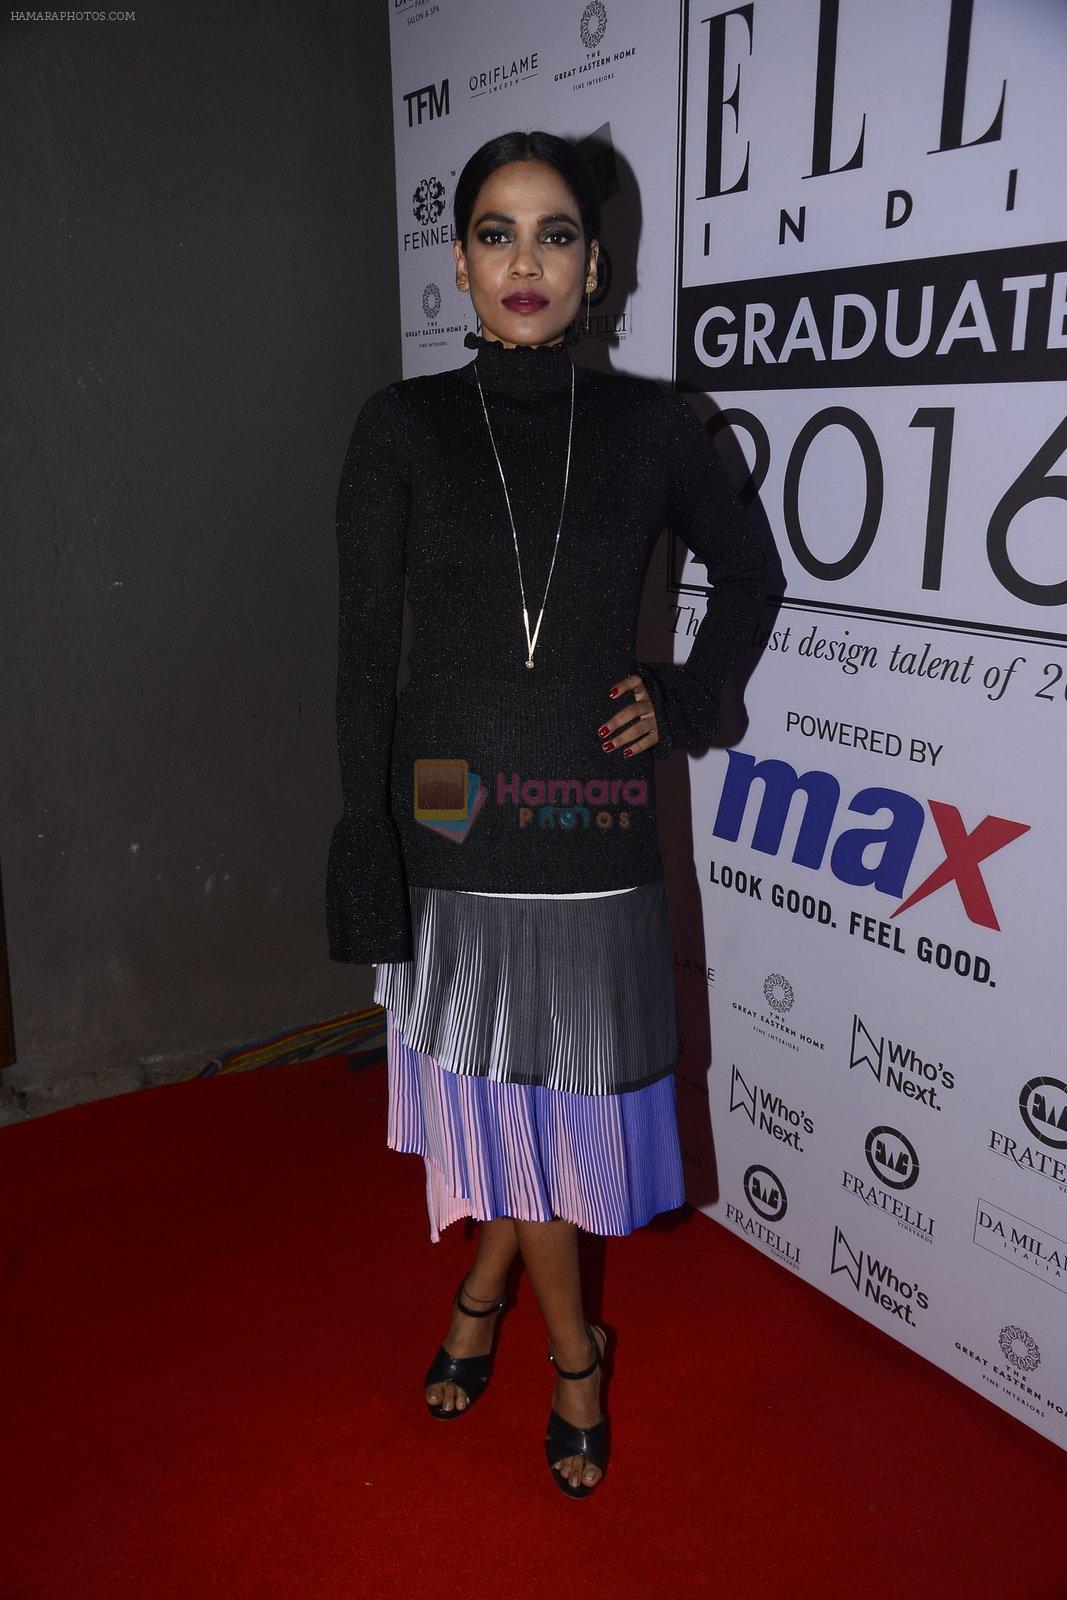 Priyanka Bose at Elle Graduate Awards on 17th Jan 2017